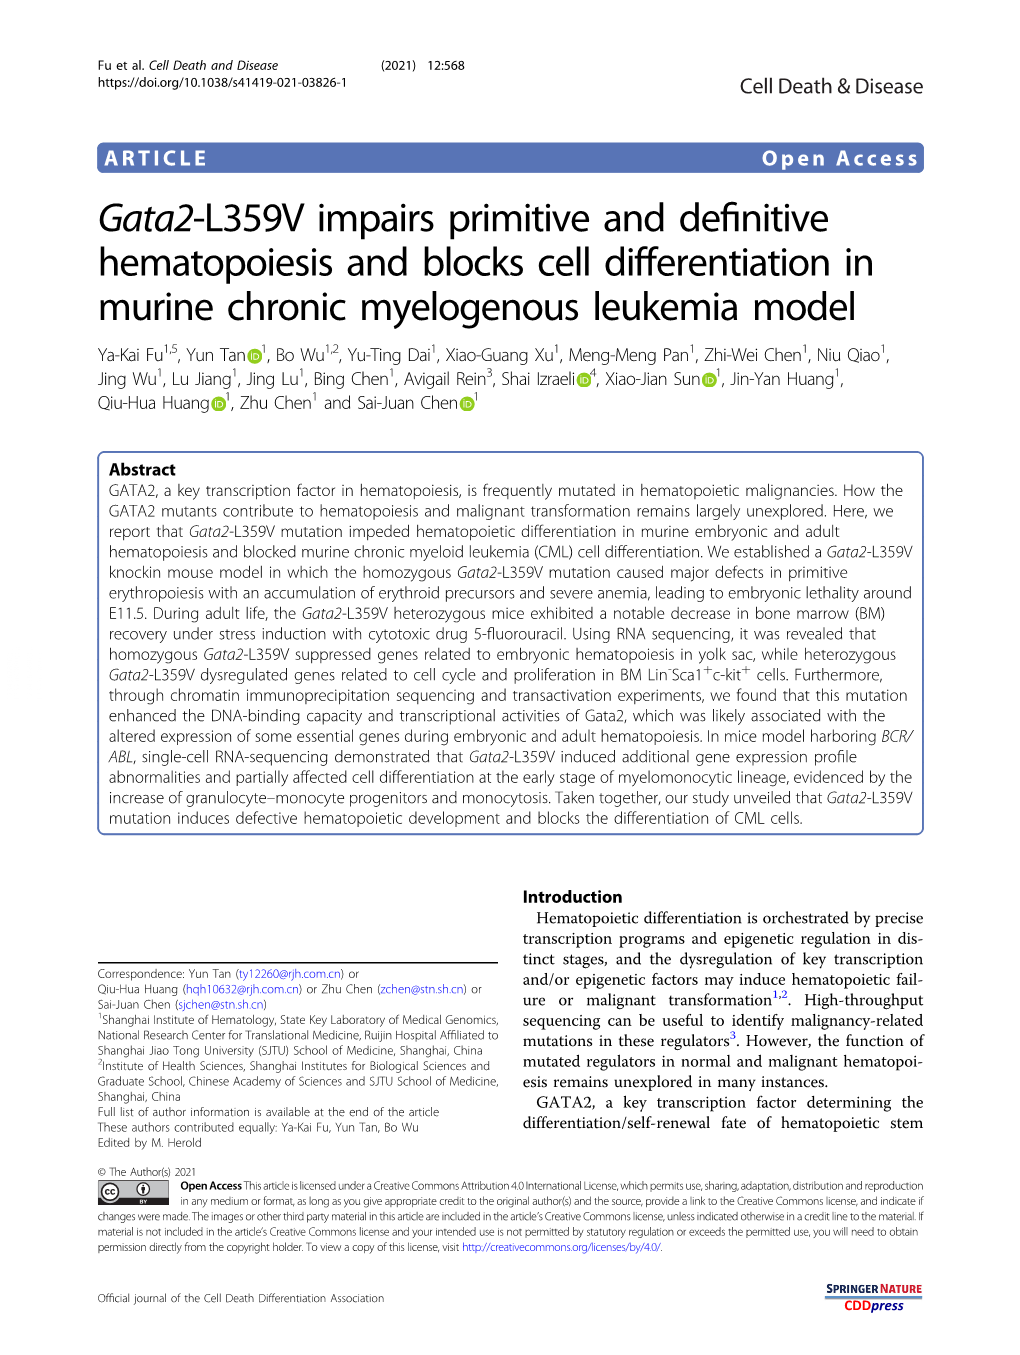 Gata2-L359V Impairs Primitive and Definitive Hematopoiesis and Blocks